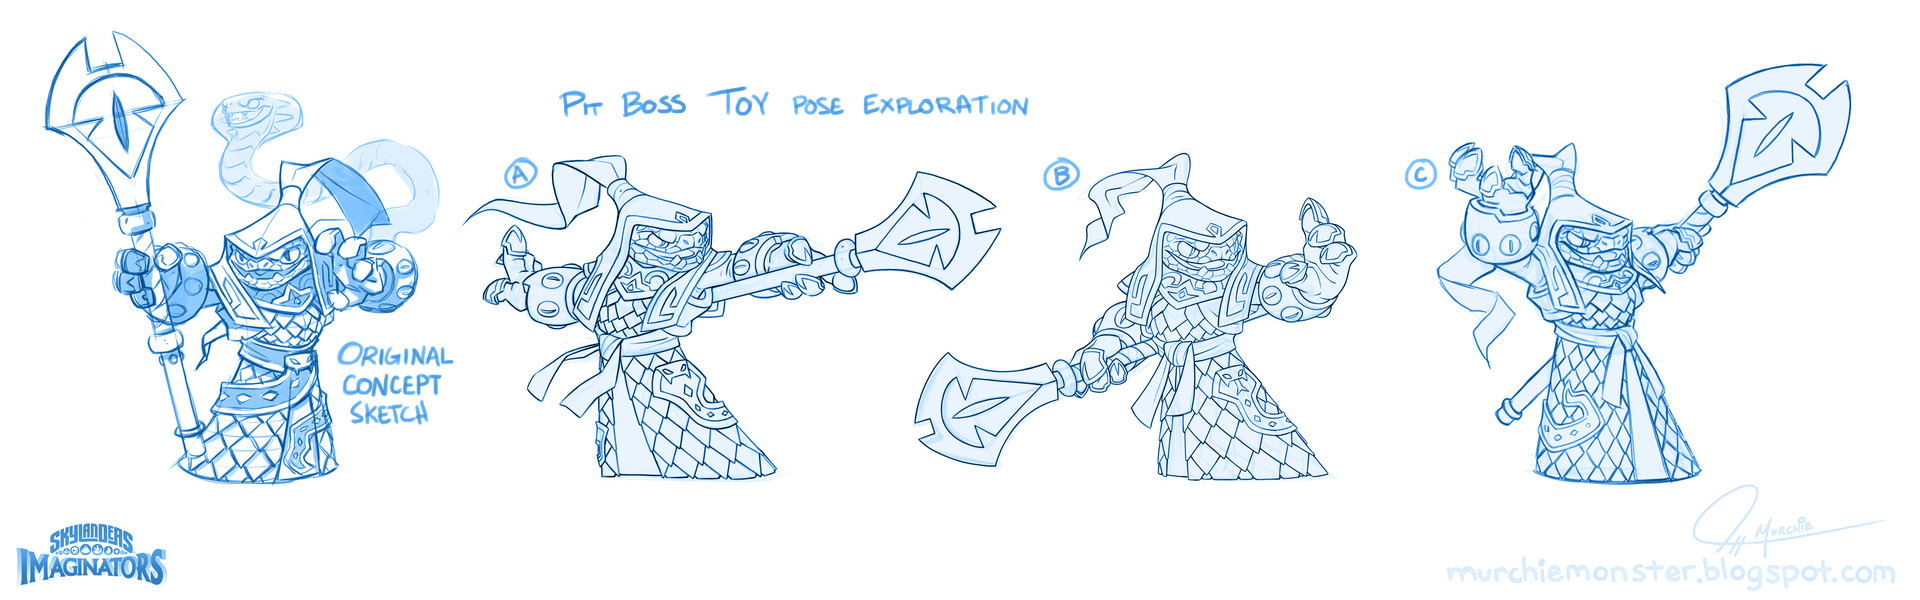 Pit Boss Toy Concept Art from "Skylanders: Imaginators" .